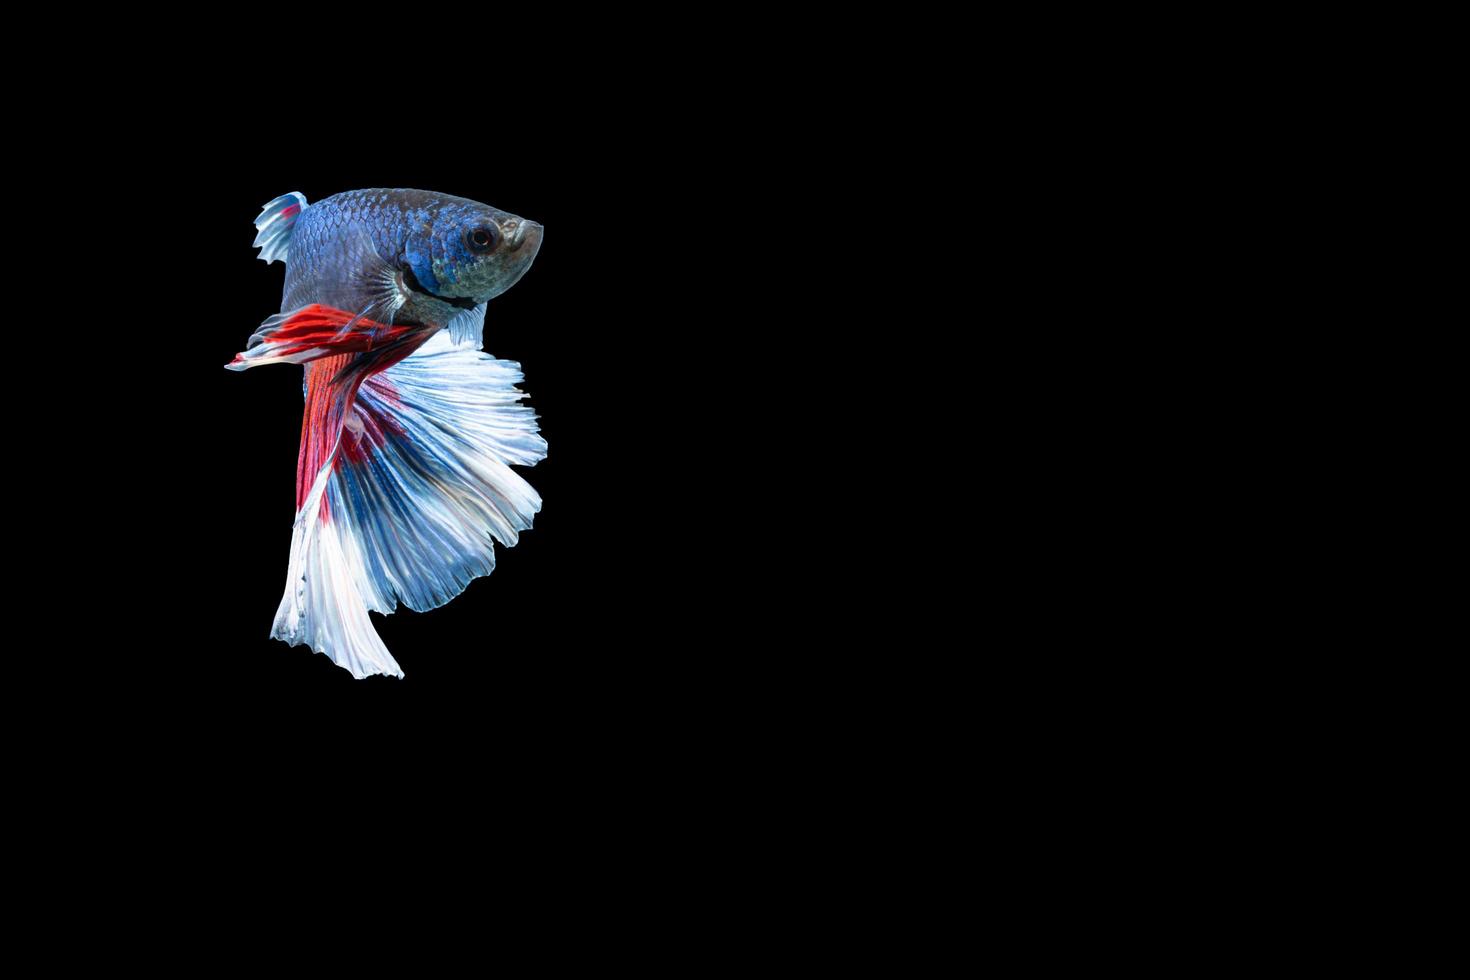 pesce betta mezzaluna con strisce blu e rosse foto